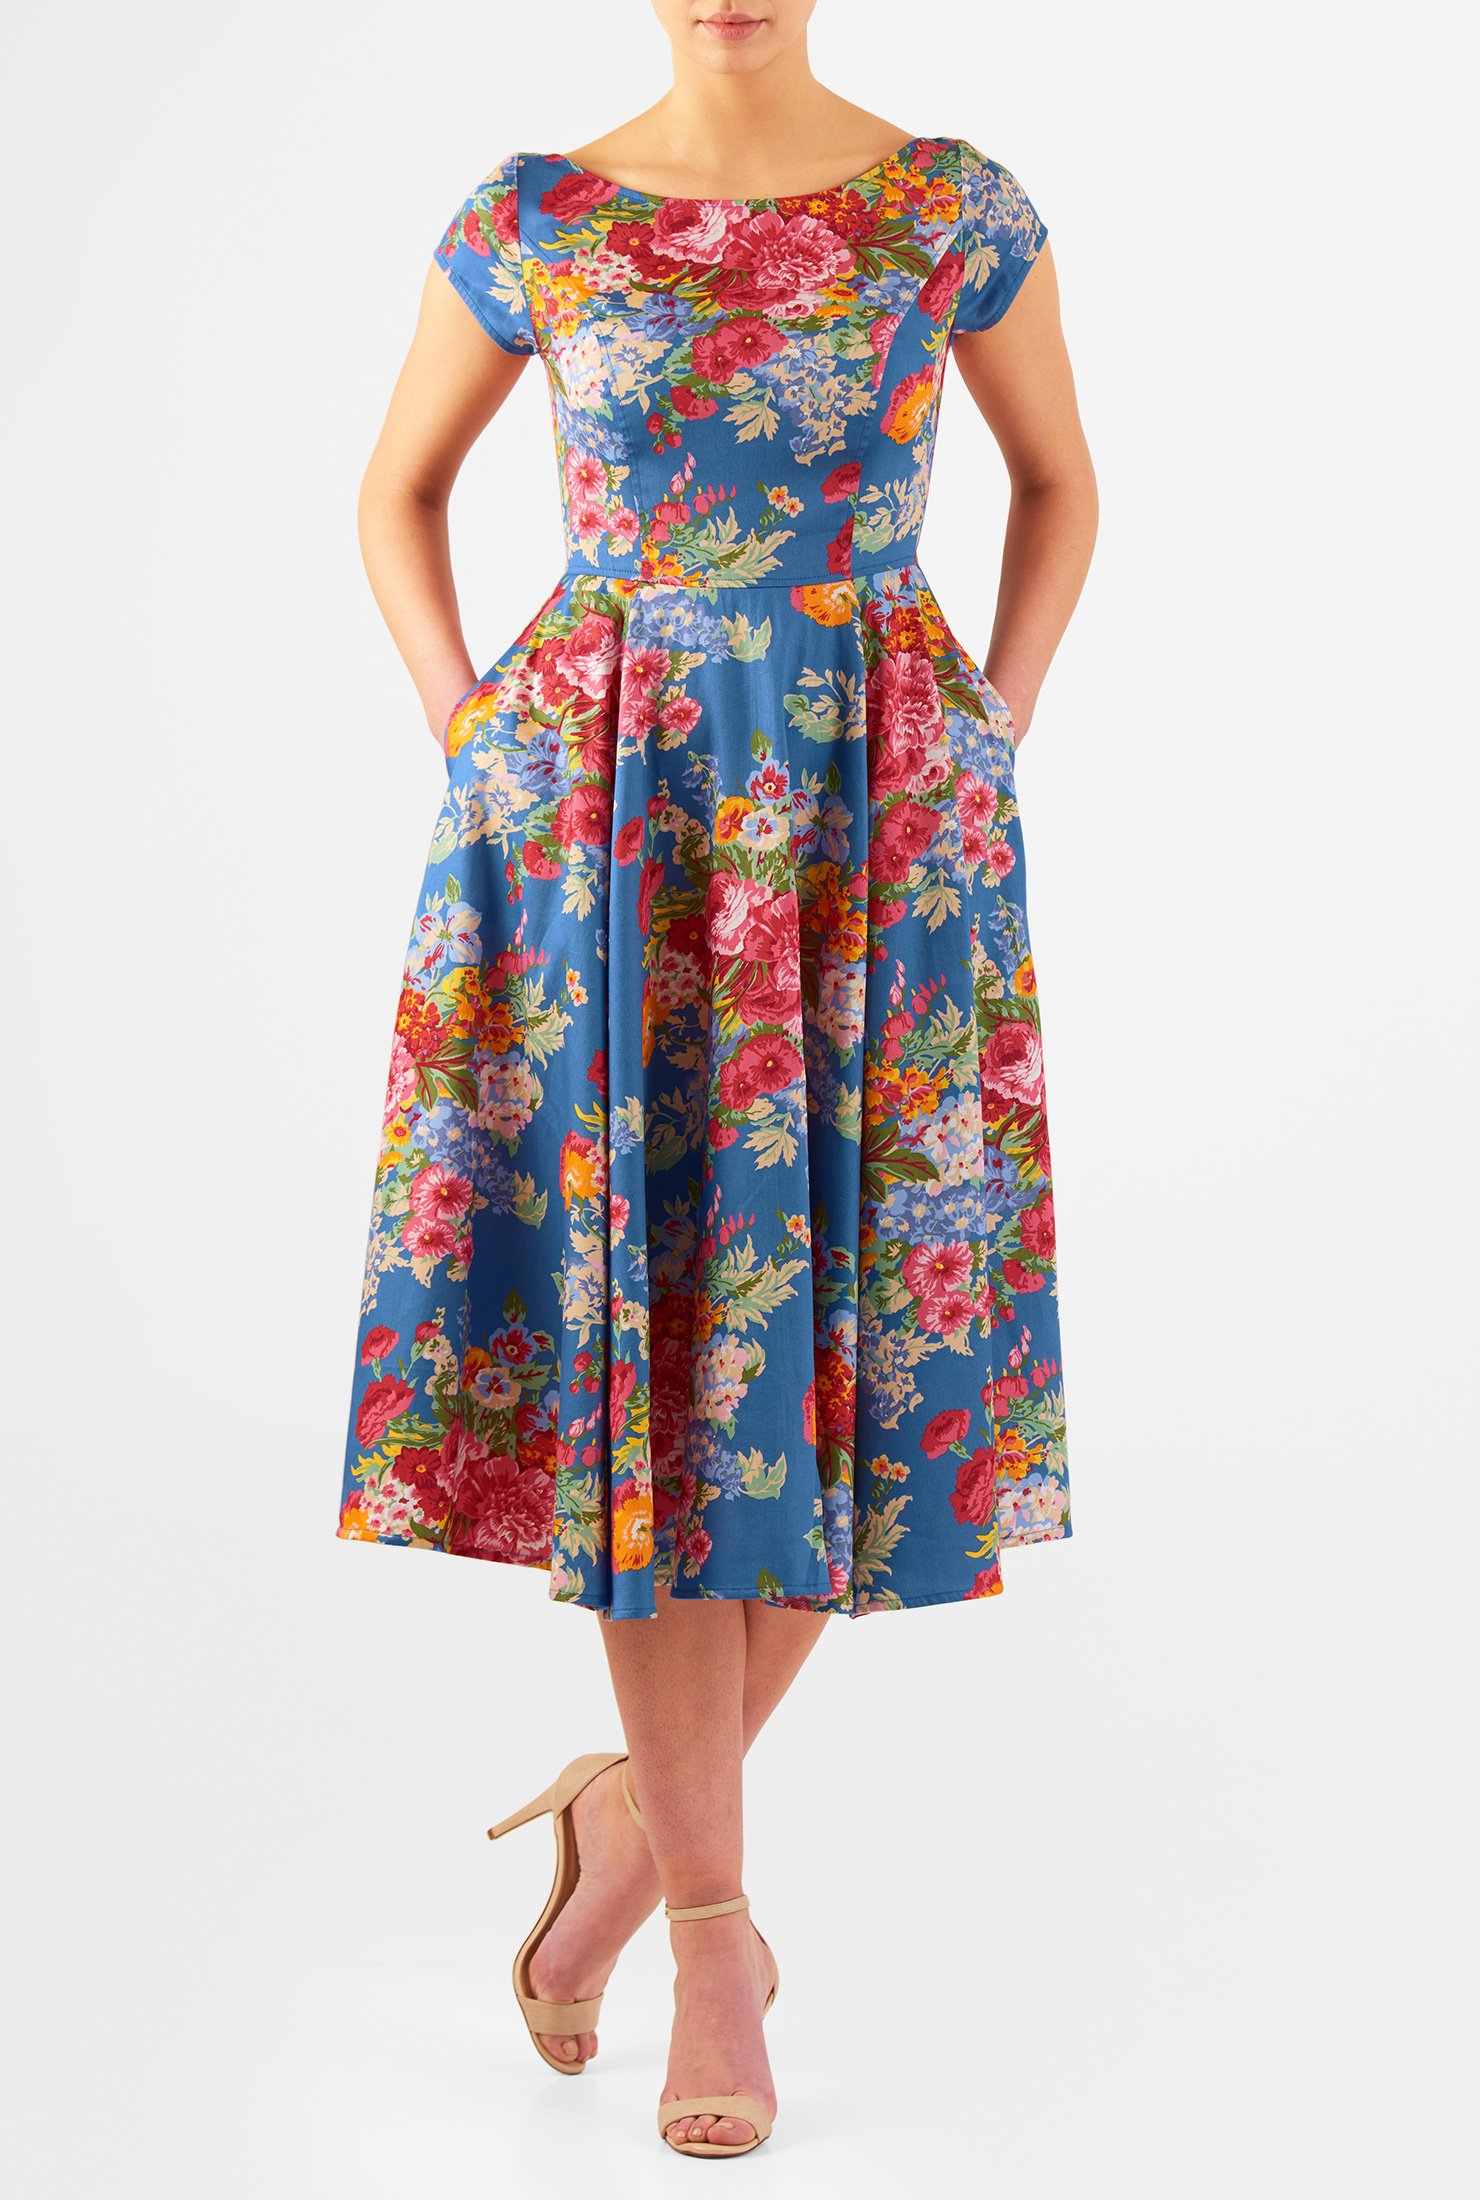 Shop Floral print fit-and-flare cotton sateen dress | eShakti